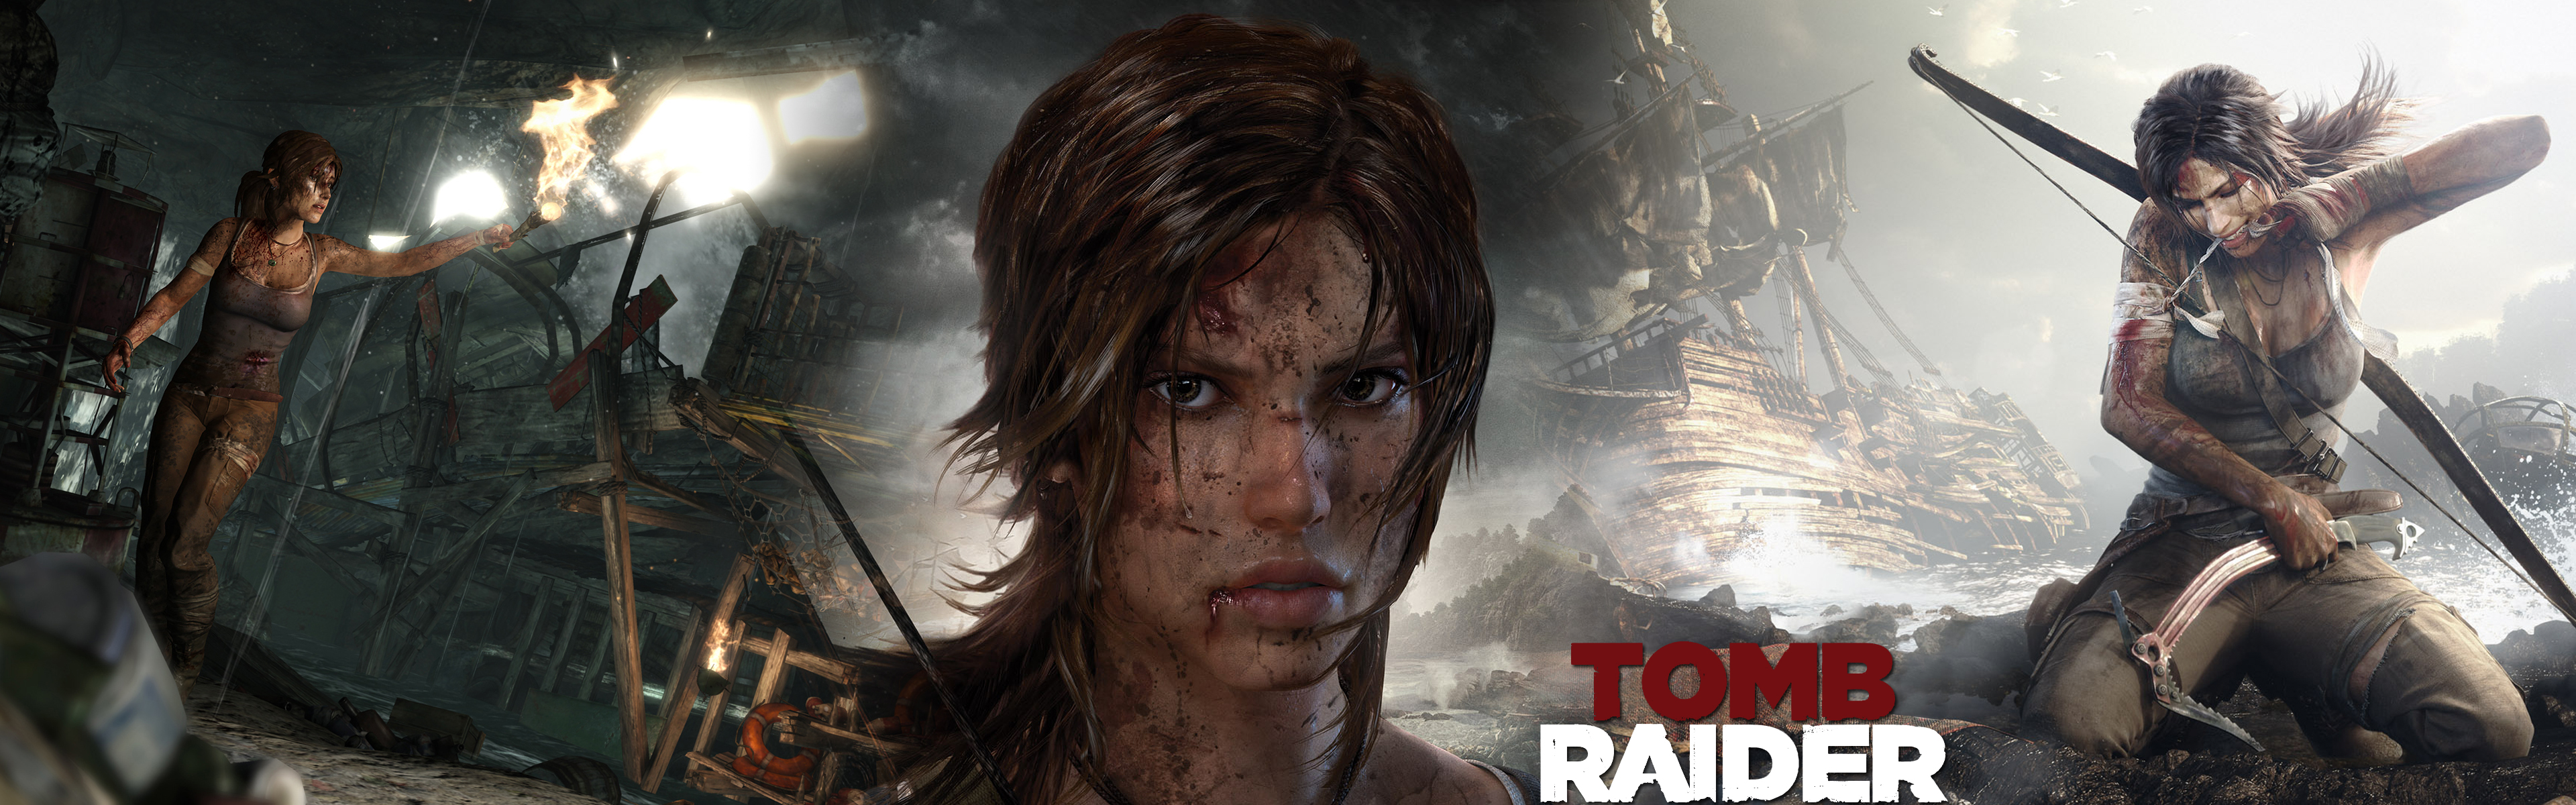 Video Game Tomb Raider 3840x1200